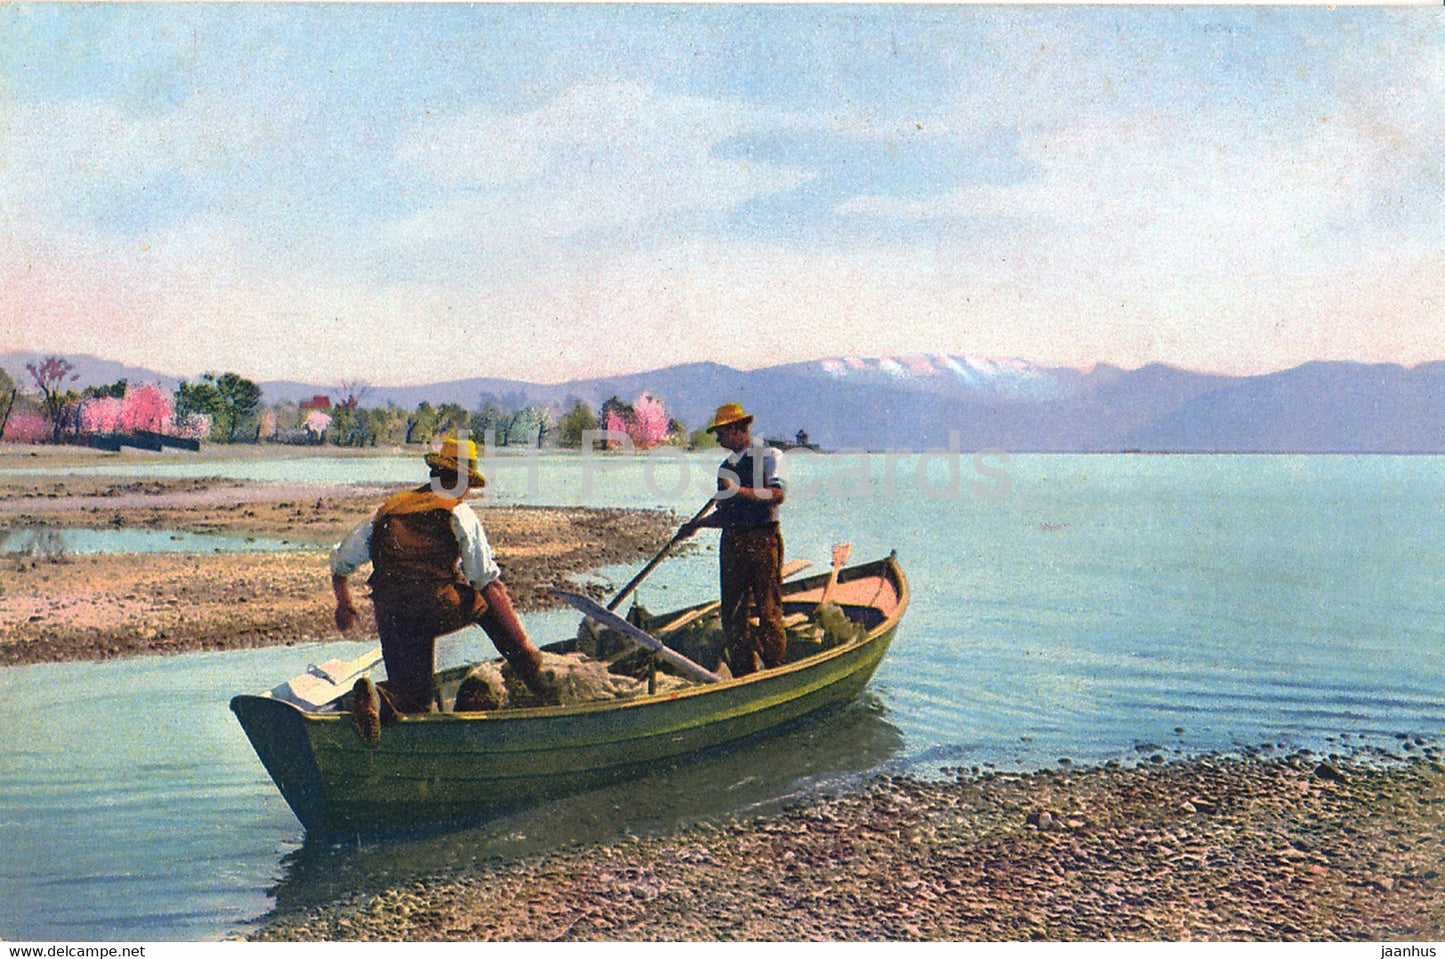 Bodensee bei Wasserburg - boat - Photochromie 3041 - Serie 172 - old postcard -  Germany - unused - JH Postcards